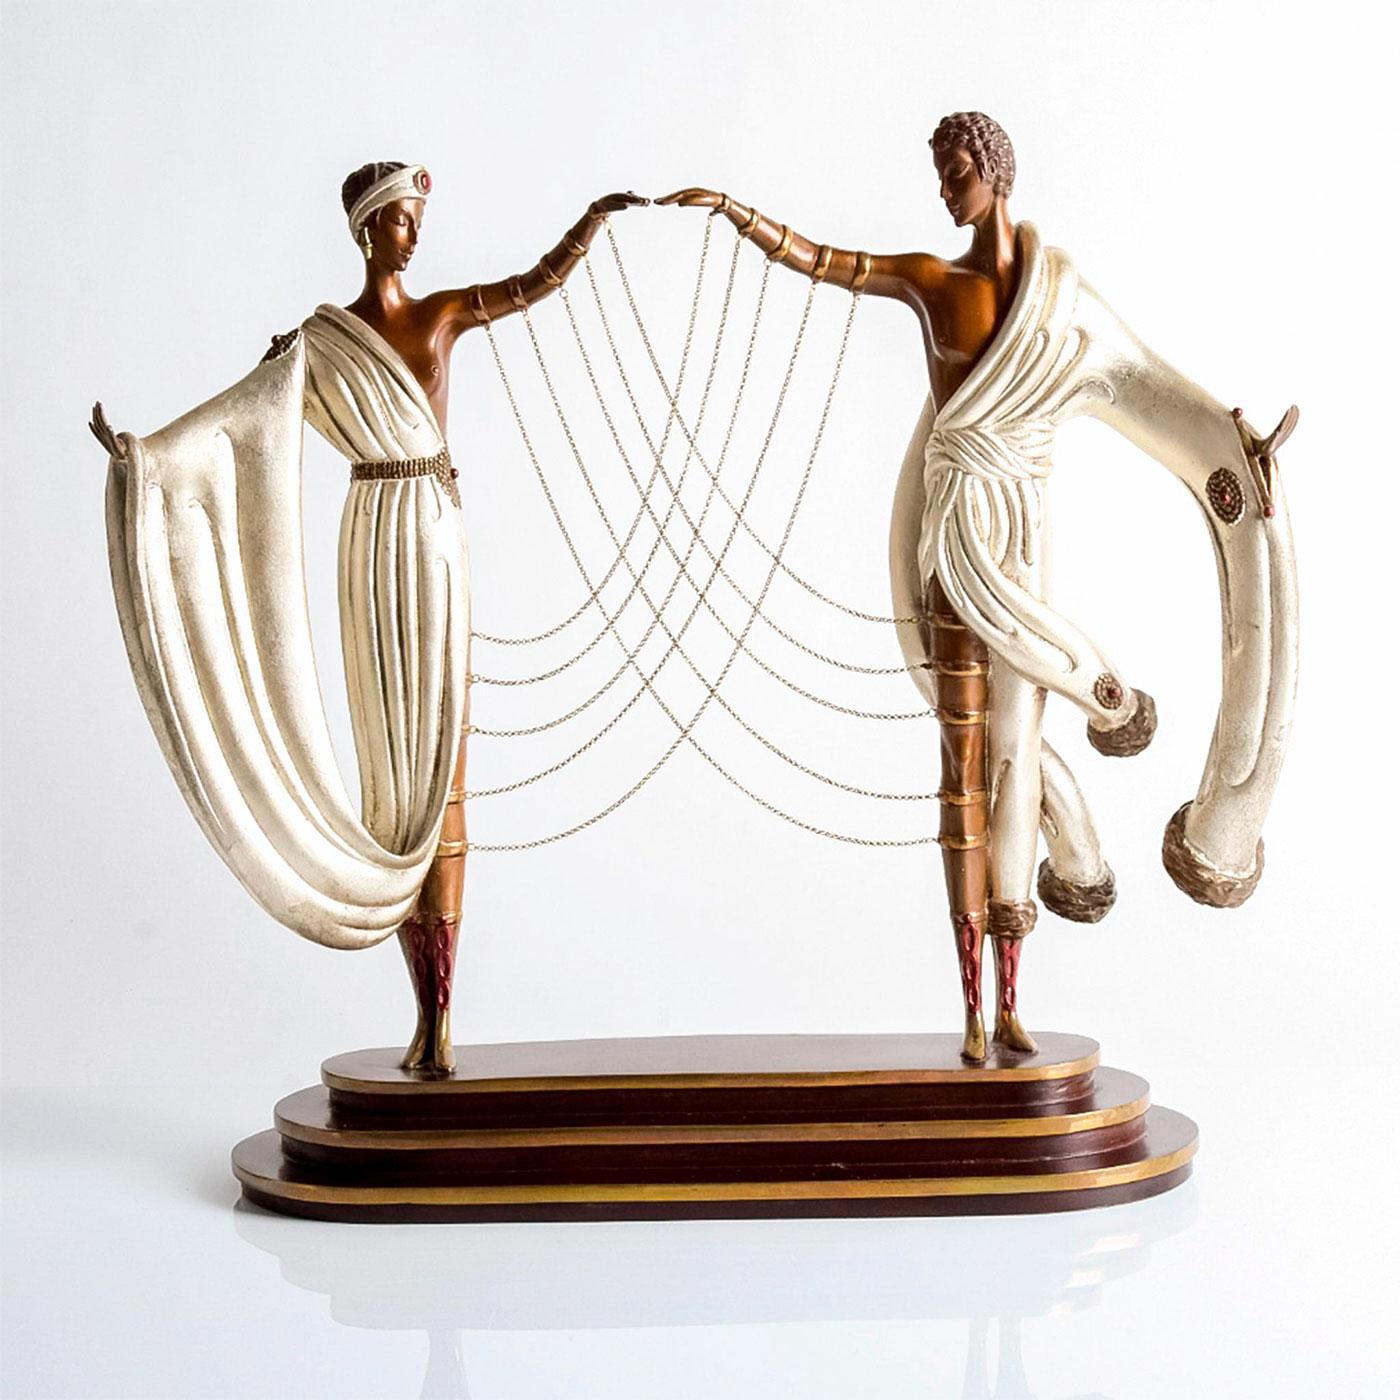 Erte - Romain de Tirtoff Figurative Sculpture - ERTE (ROMAIN DE TIRTOFF) 'THE WEDDING' BRONZE SCULPTURE